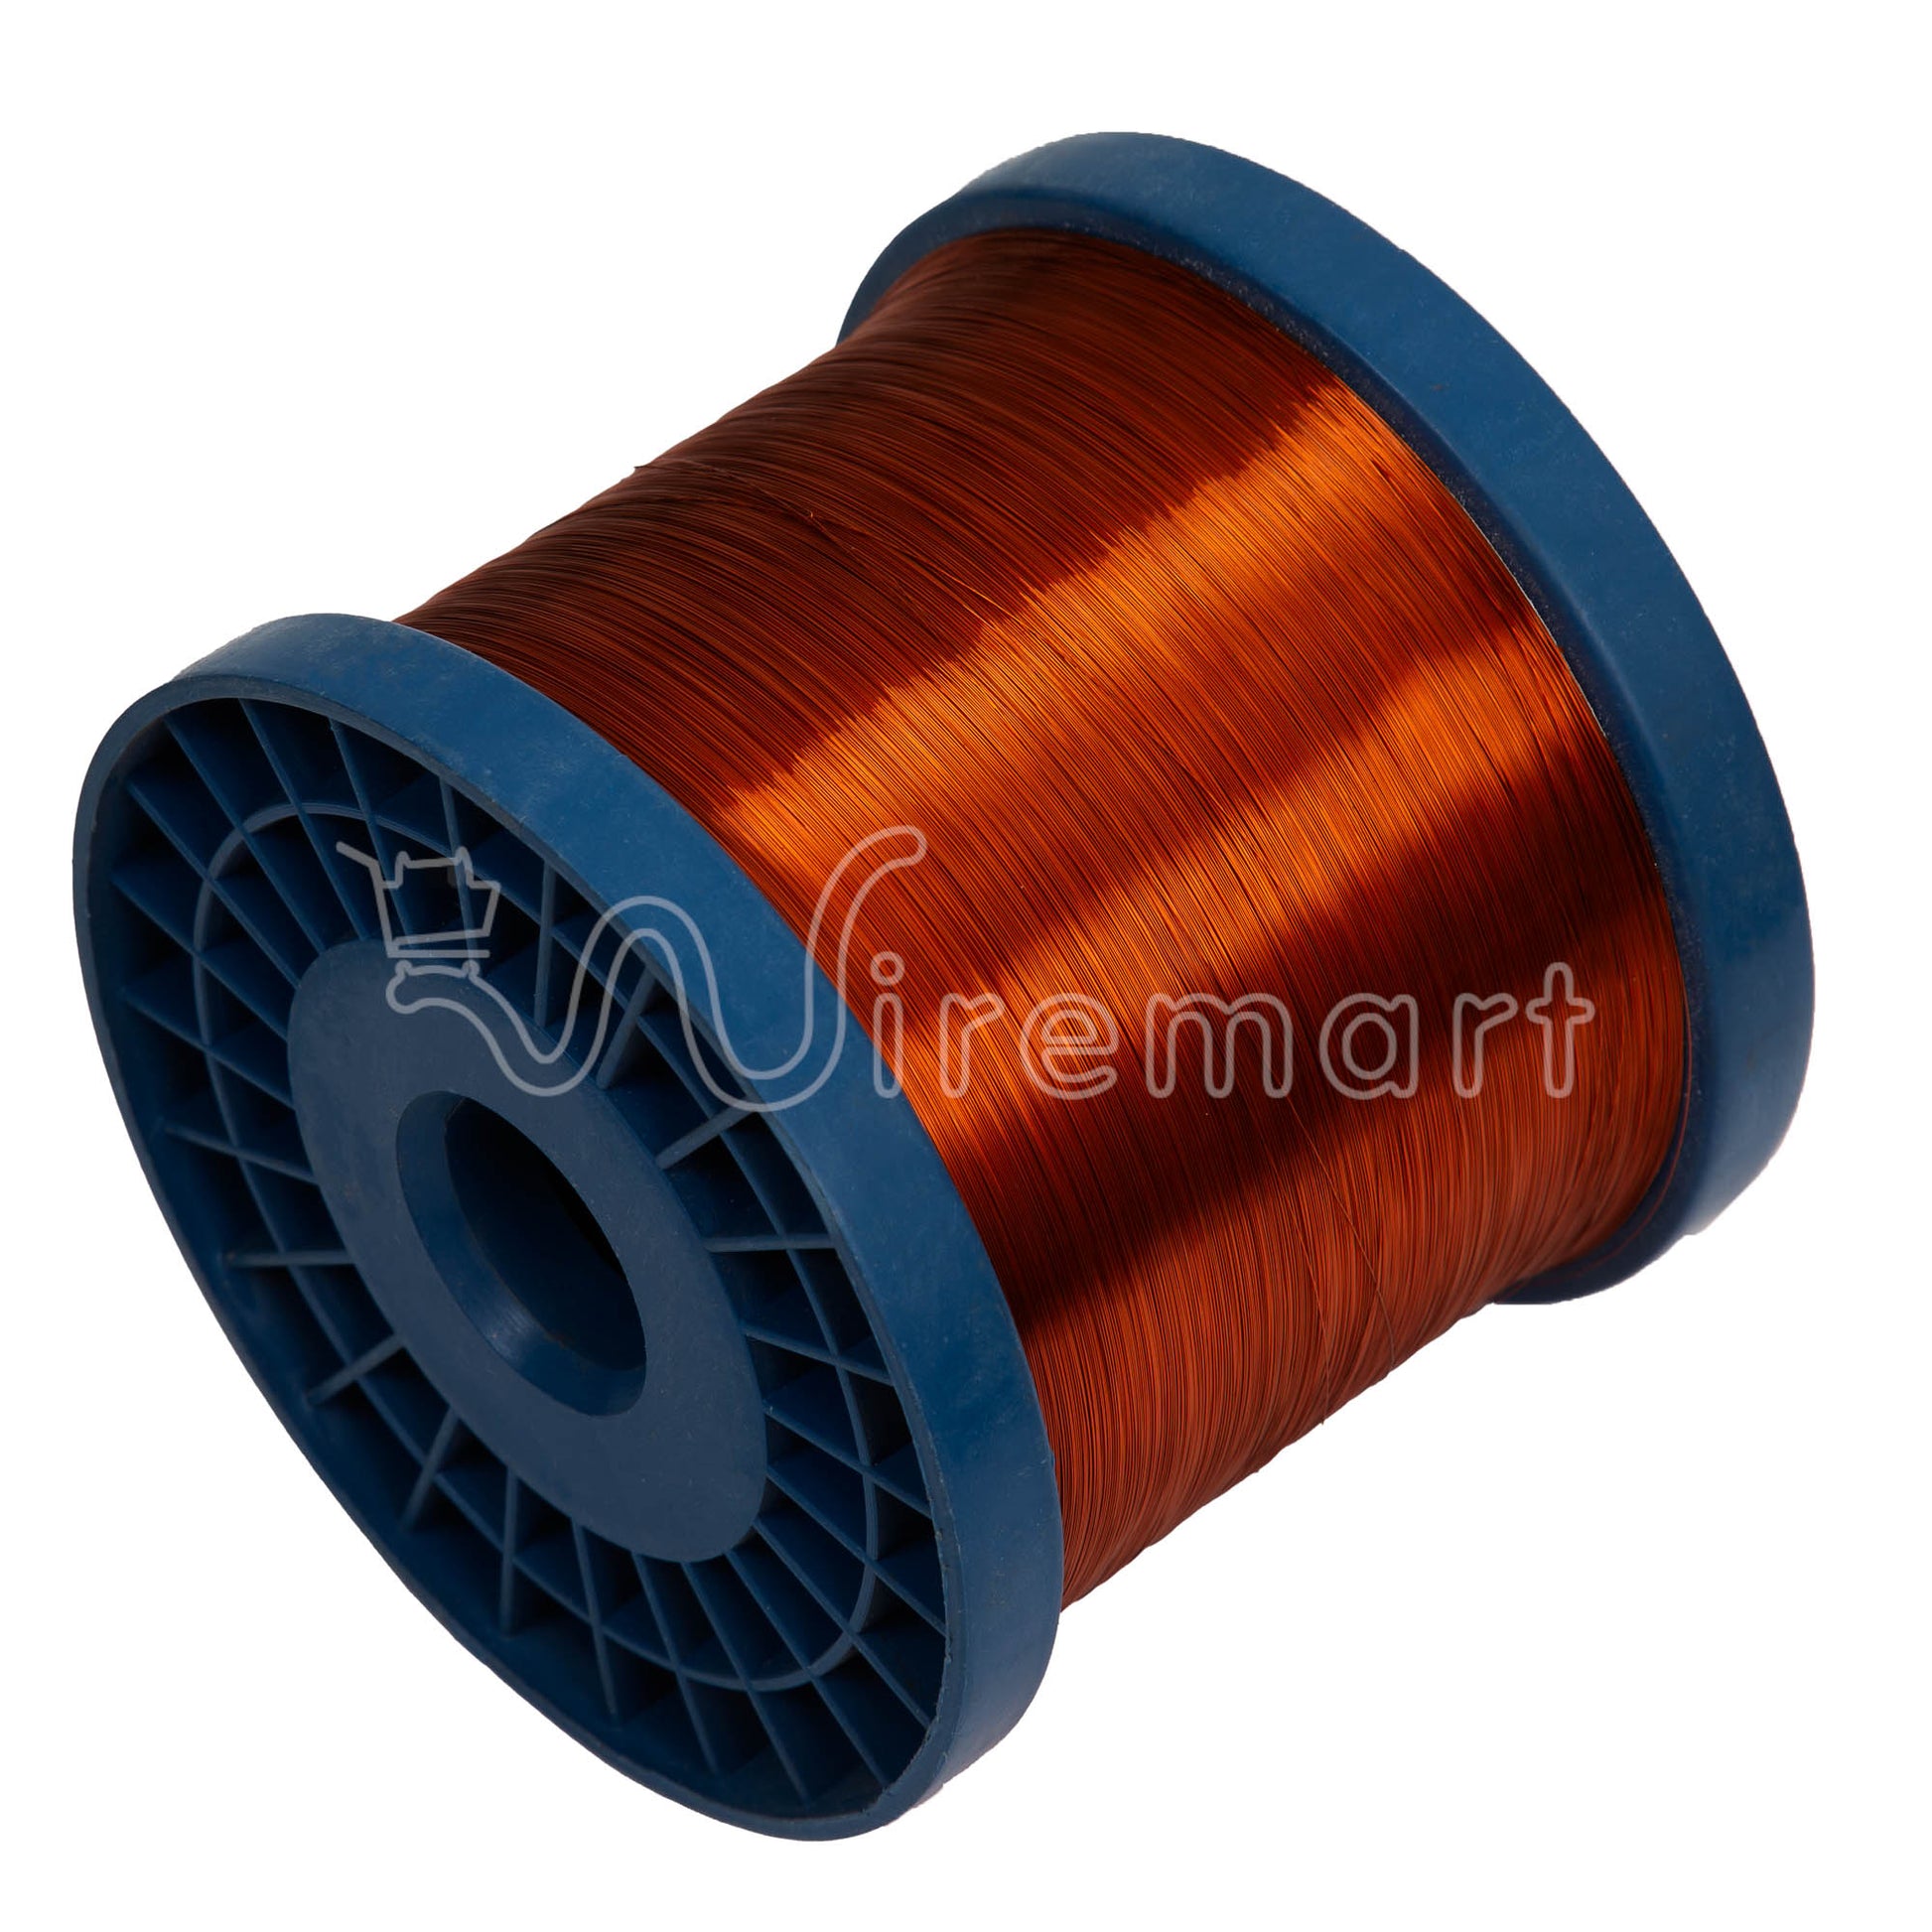 sonametals 10 Gauge Copper Wire Price in India - Buy sonametals 10 Gauge  Copper Wire online at